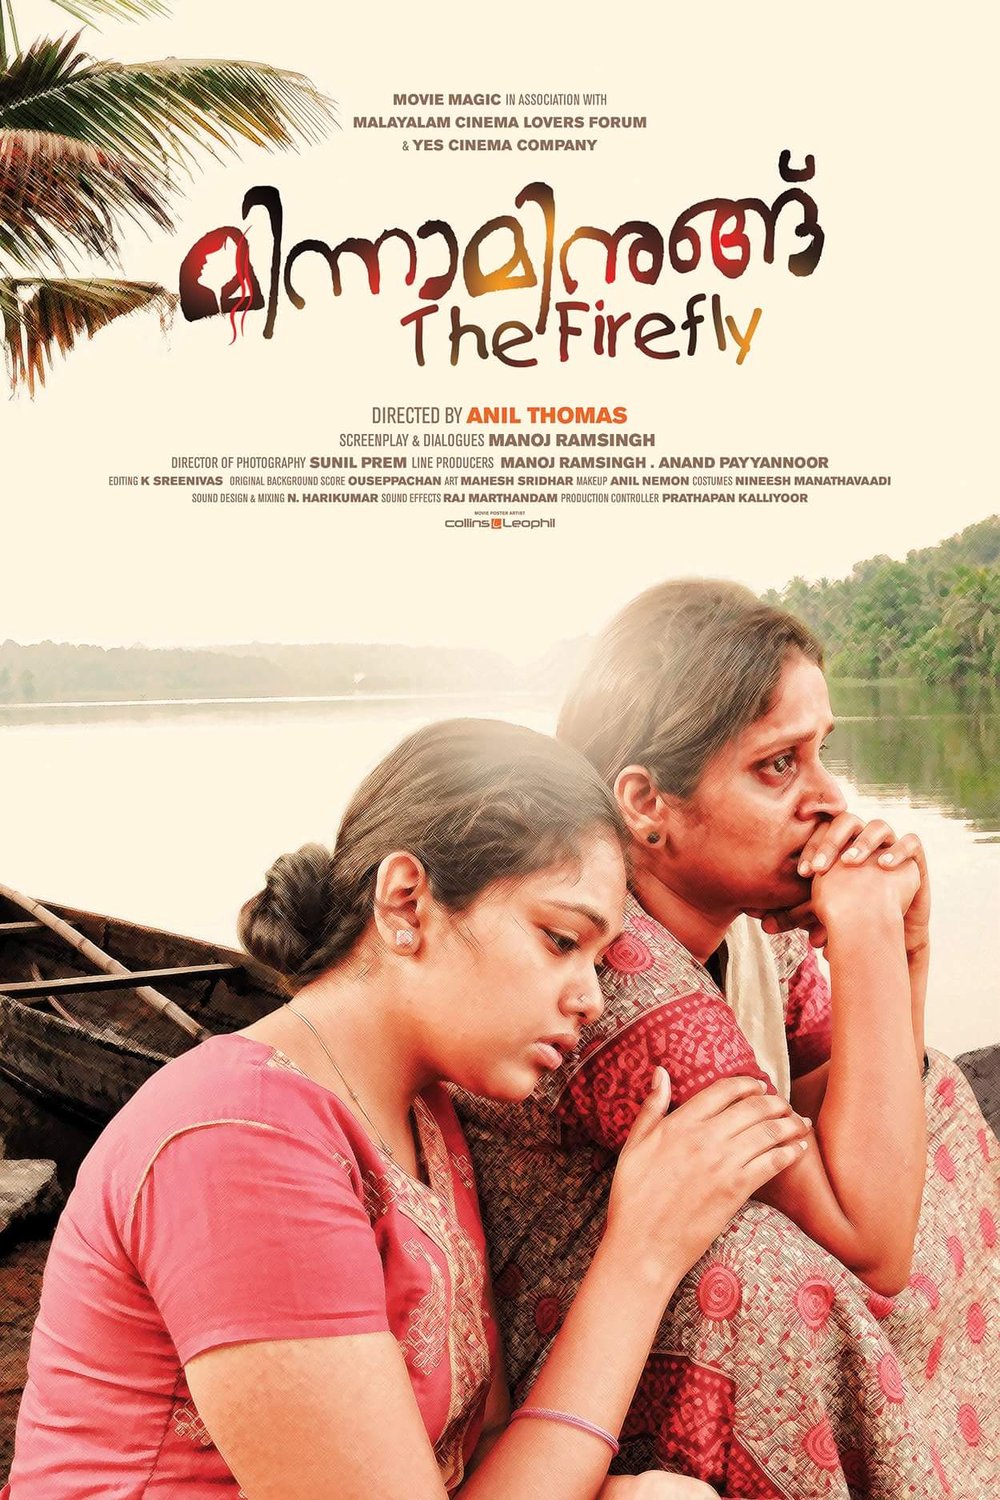 Malayalam poster of the movie Minnaminugu: The FireFly